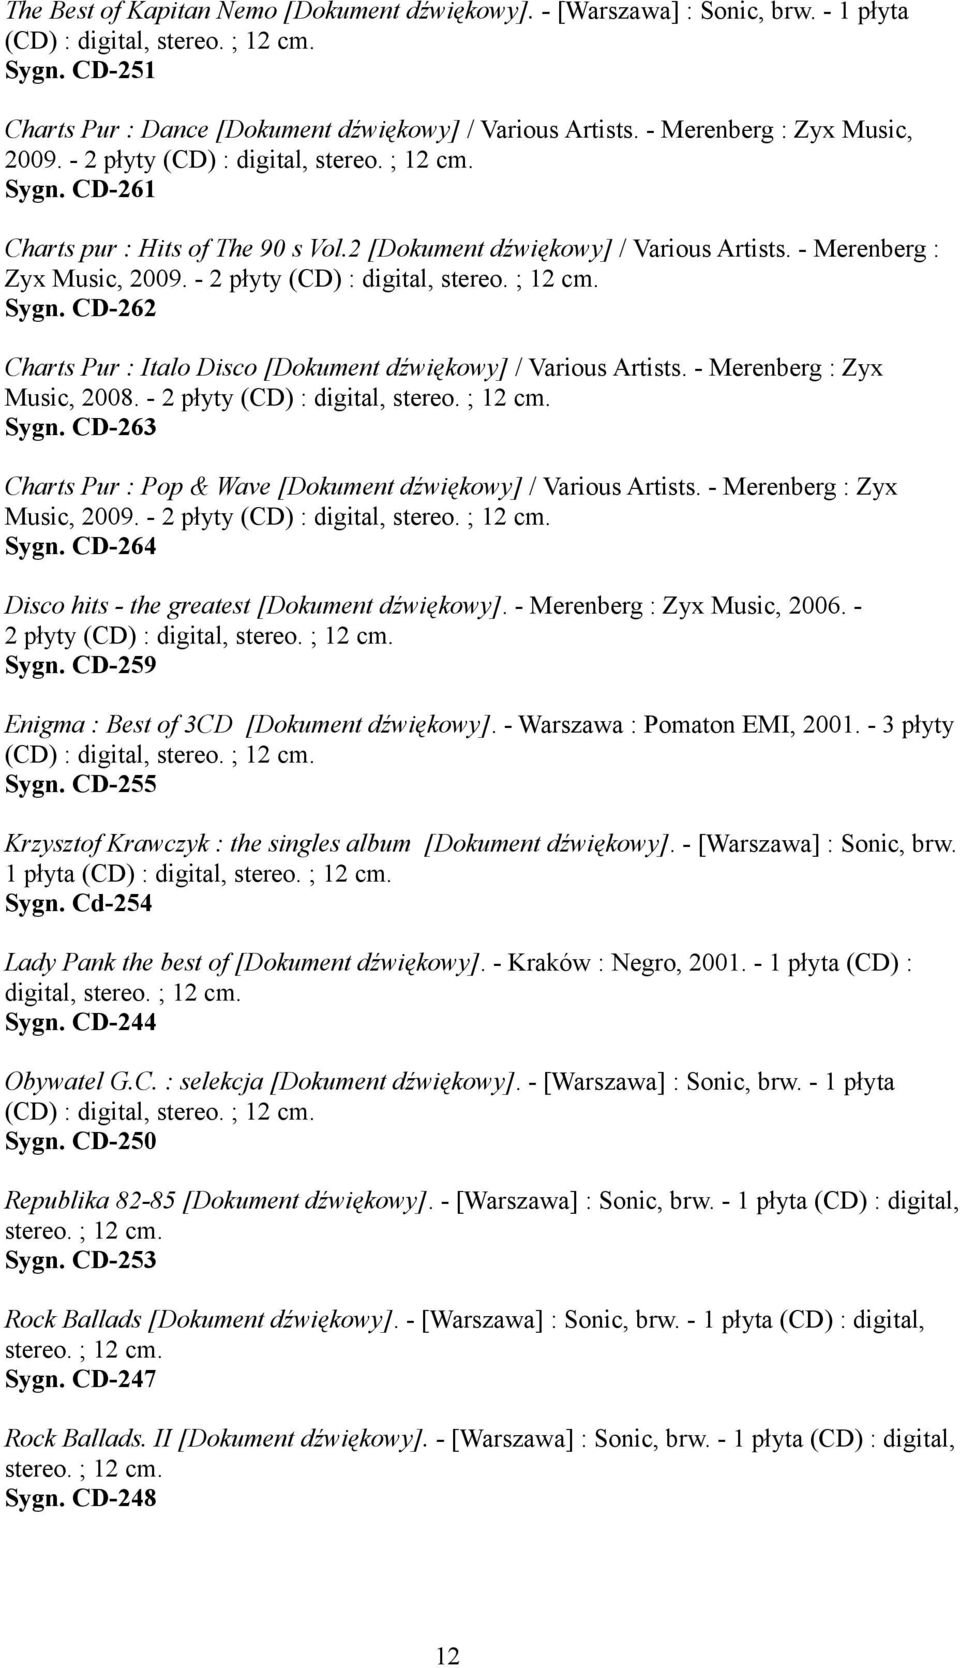 - 2 płyty (CD) : digital, stereo. ; 12 cm. Sygn. CD-262 Charts Pur : Italo Disco [Dokument dźwiękowy] / Various Artists. - Merenberg : Zyx Music, 2008. - 2 płyty (CD) : digital, stereo. ; 12 cm. Sygn. CD-263 Charts Pur : Pop & Wave [Dokument dźwiękowy] / Various Artists.